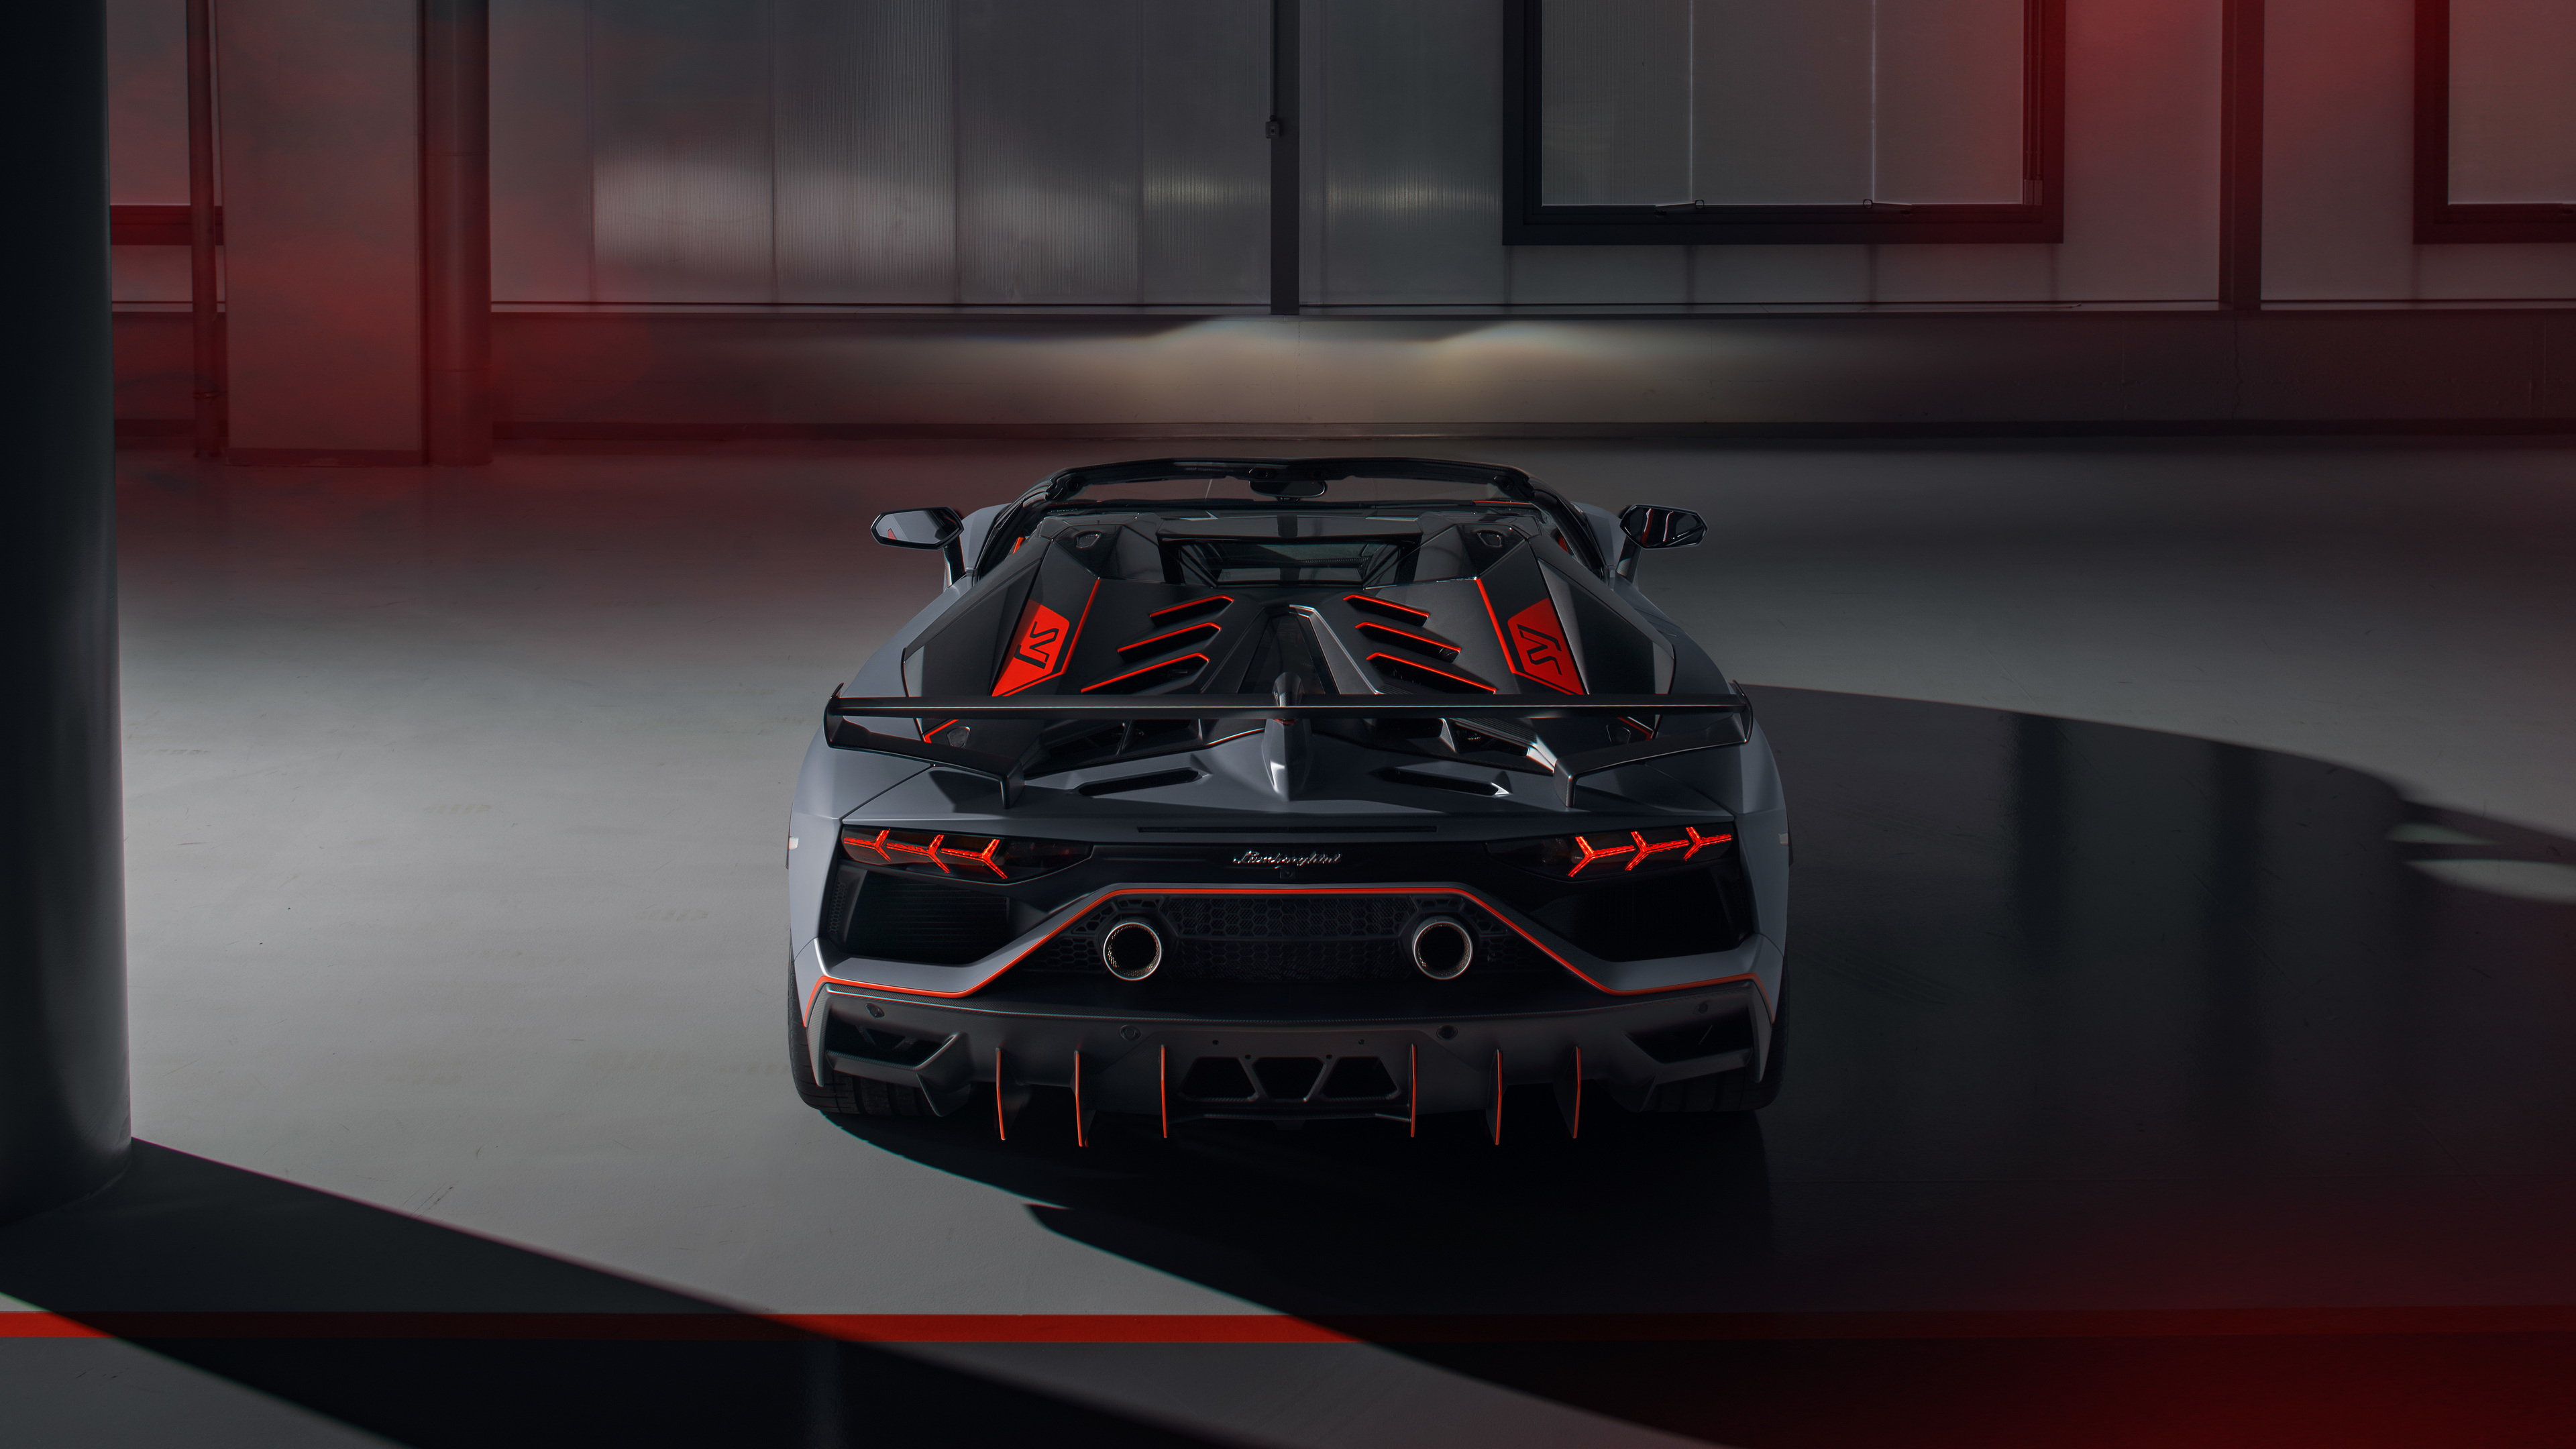 Lamborghini Aventador Svj Wallpapers